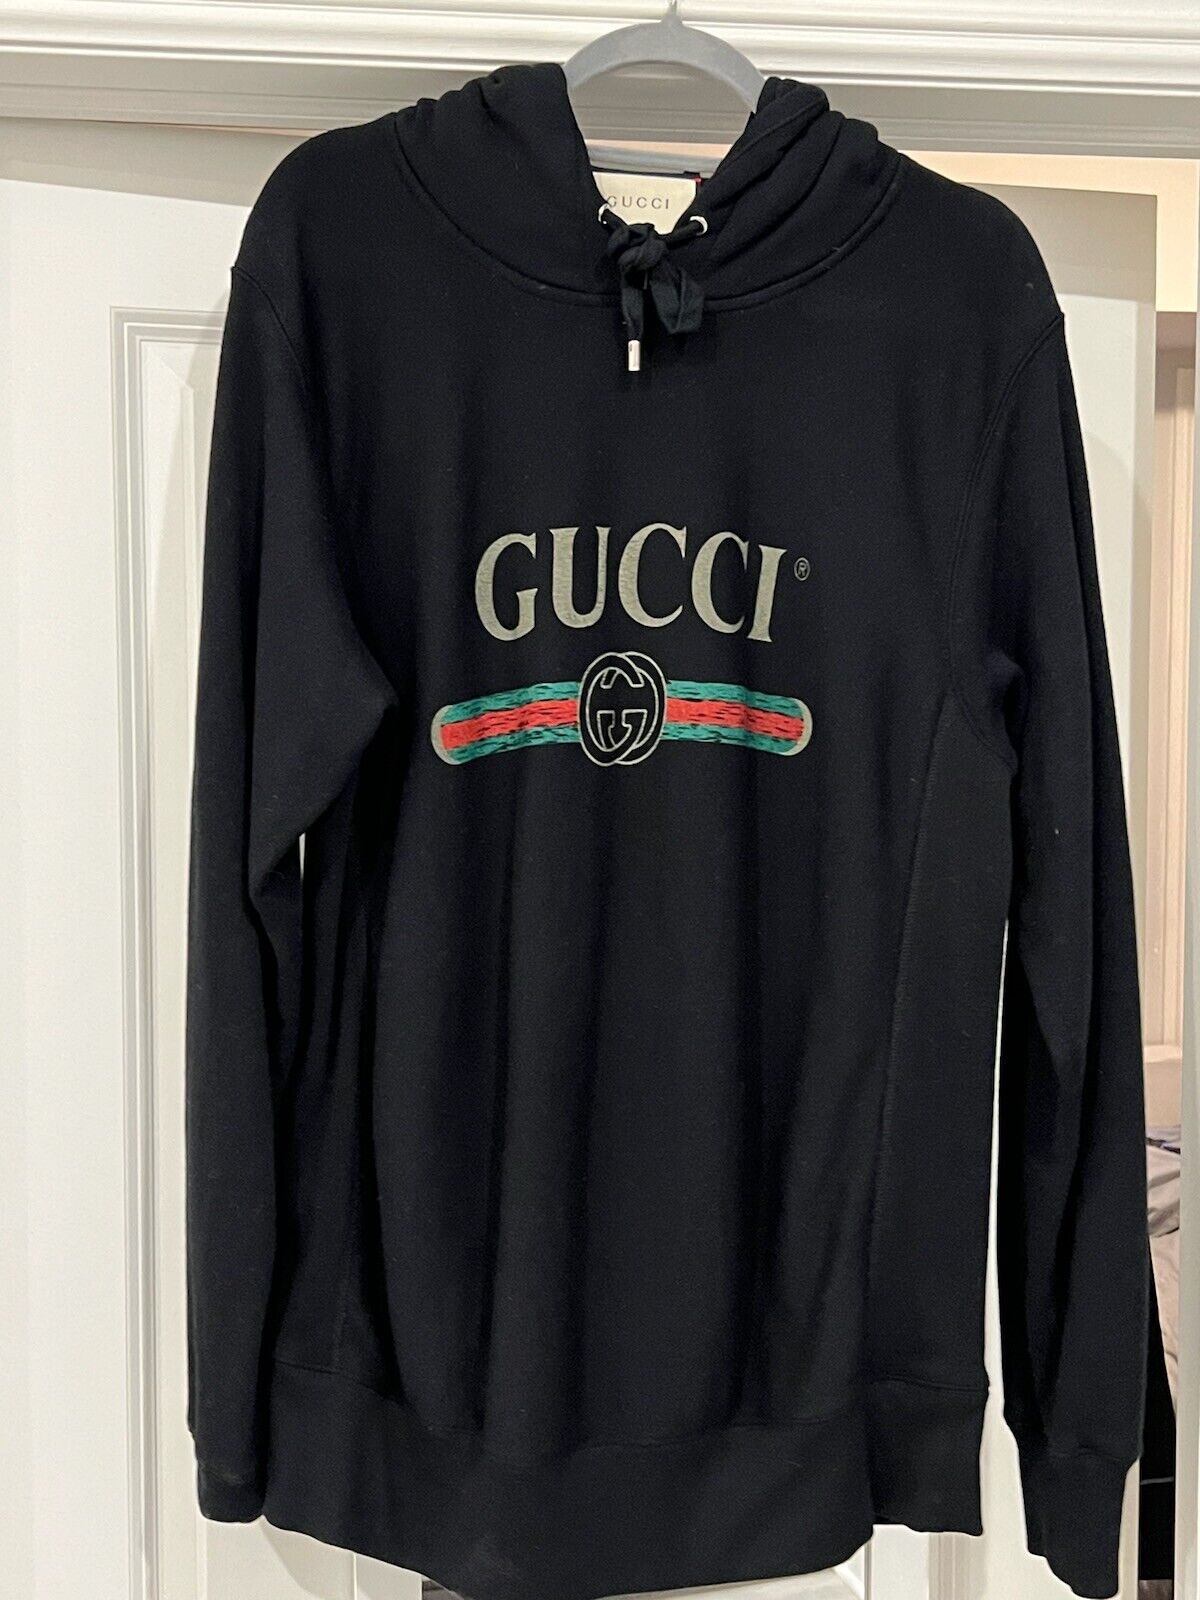 Væve motto lille Gucci black hoodie size M | eBay